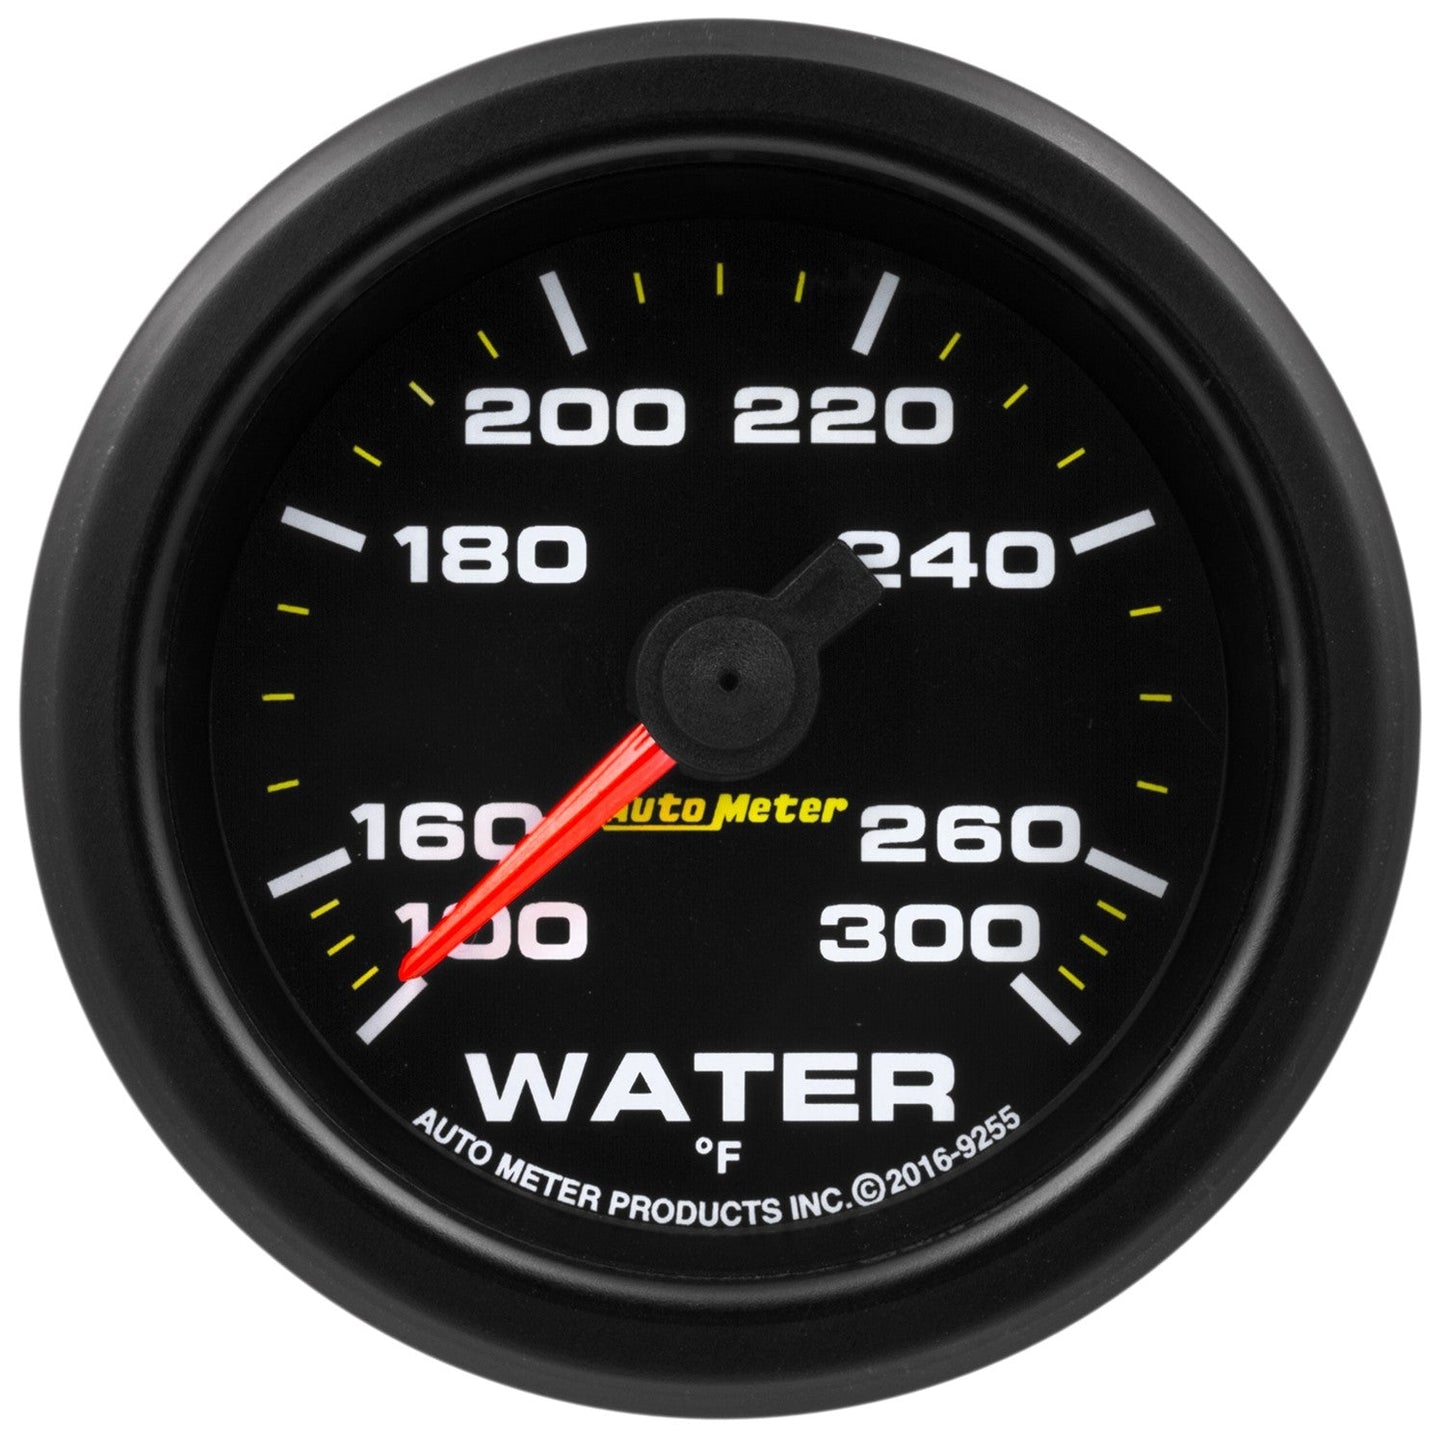 AutoMeter - 2 1/16", GAUGE, WATER TEMP, 300ºF, STEPPER MOTOR W/PEAK & WARN, EXTREME ENVIRONMENT (9255)